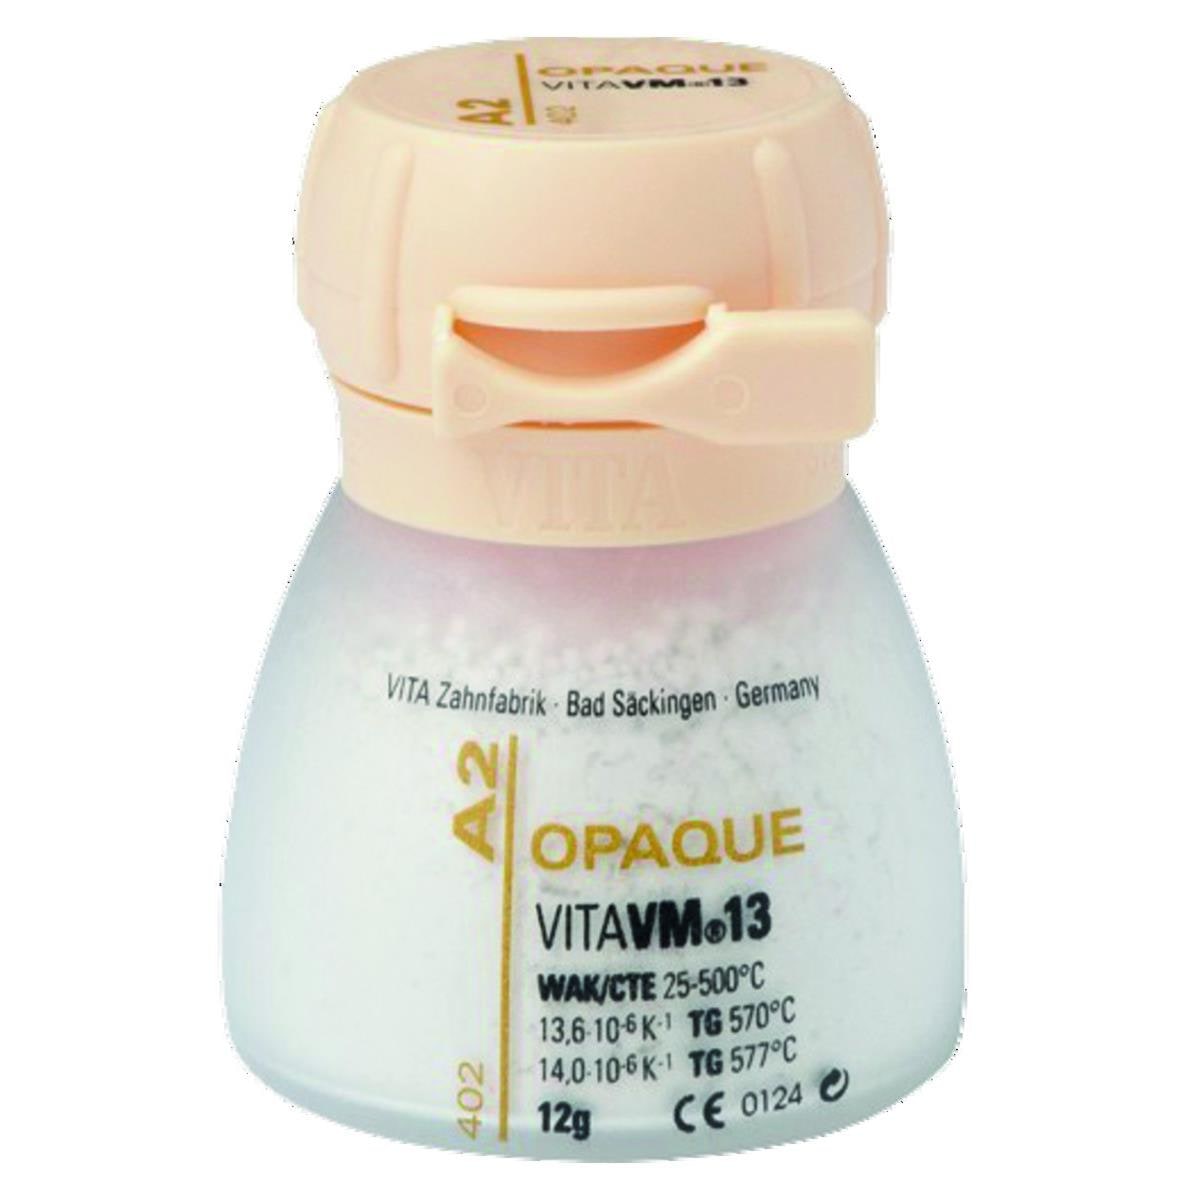 VM13 VITA - Opaque poudre - B1 - Le pot de 12 g